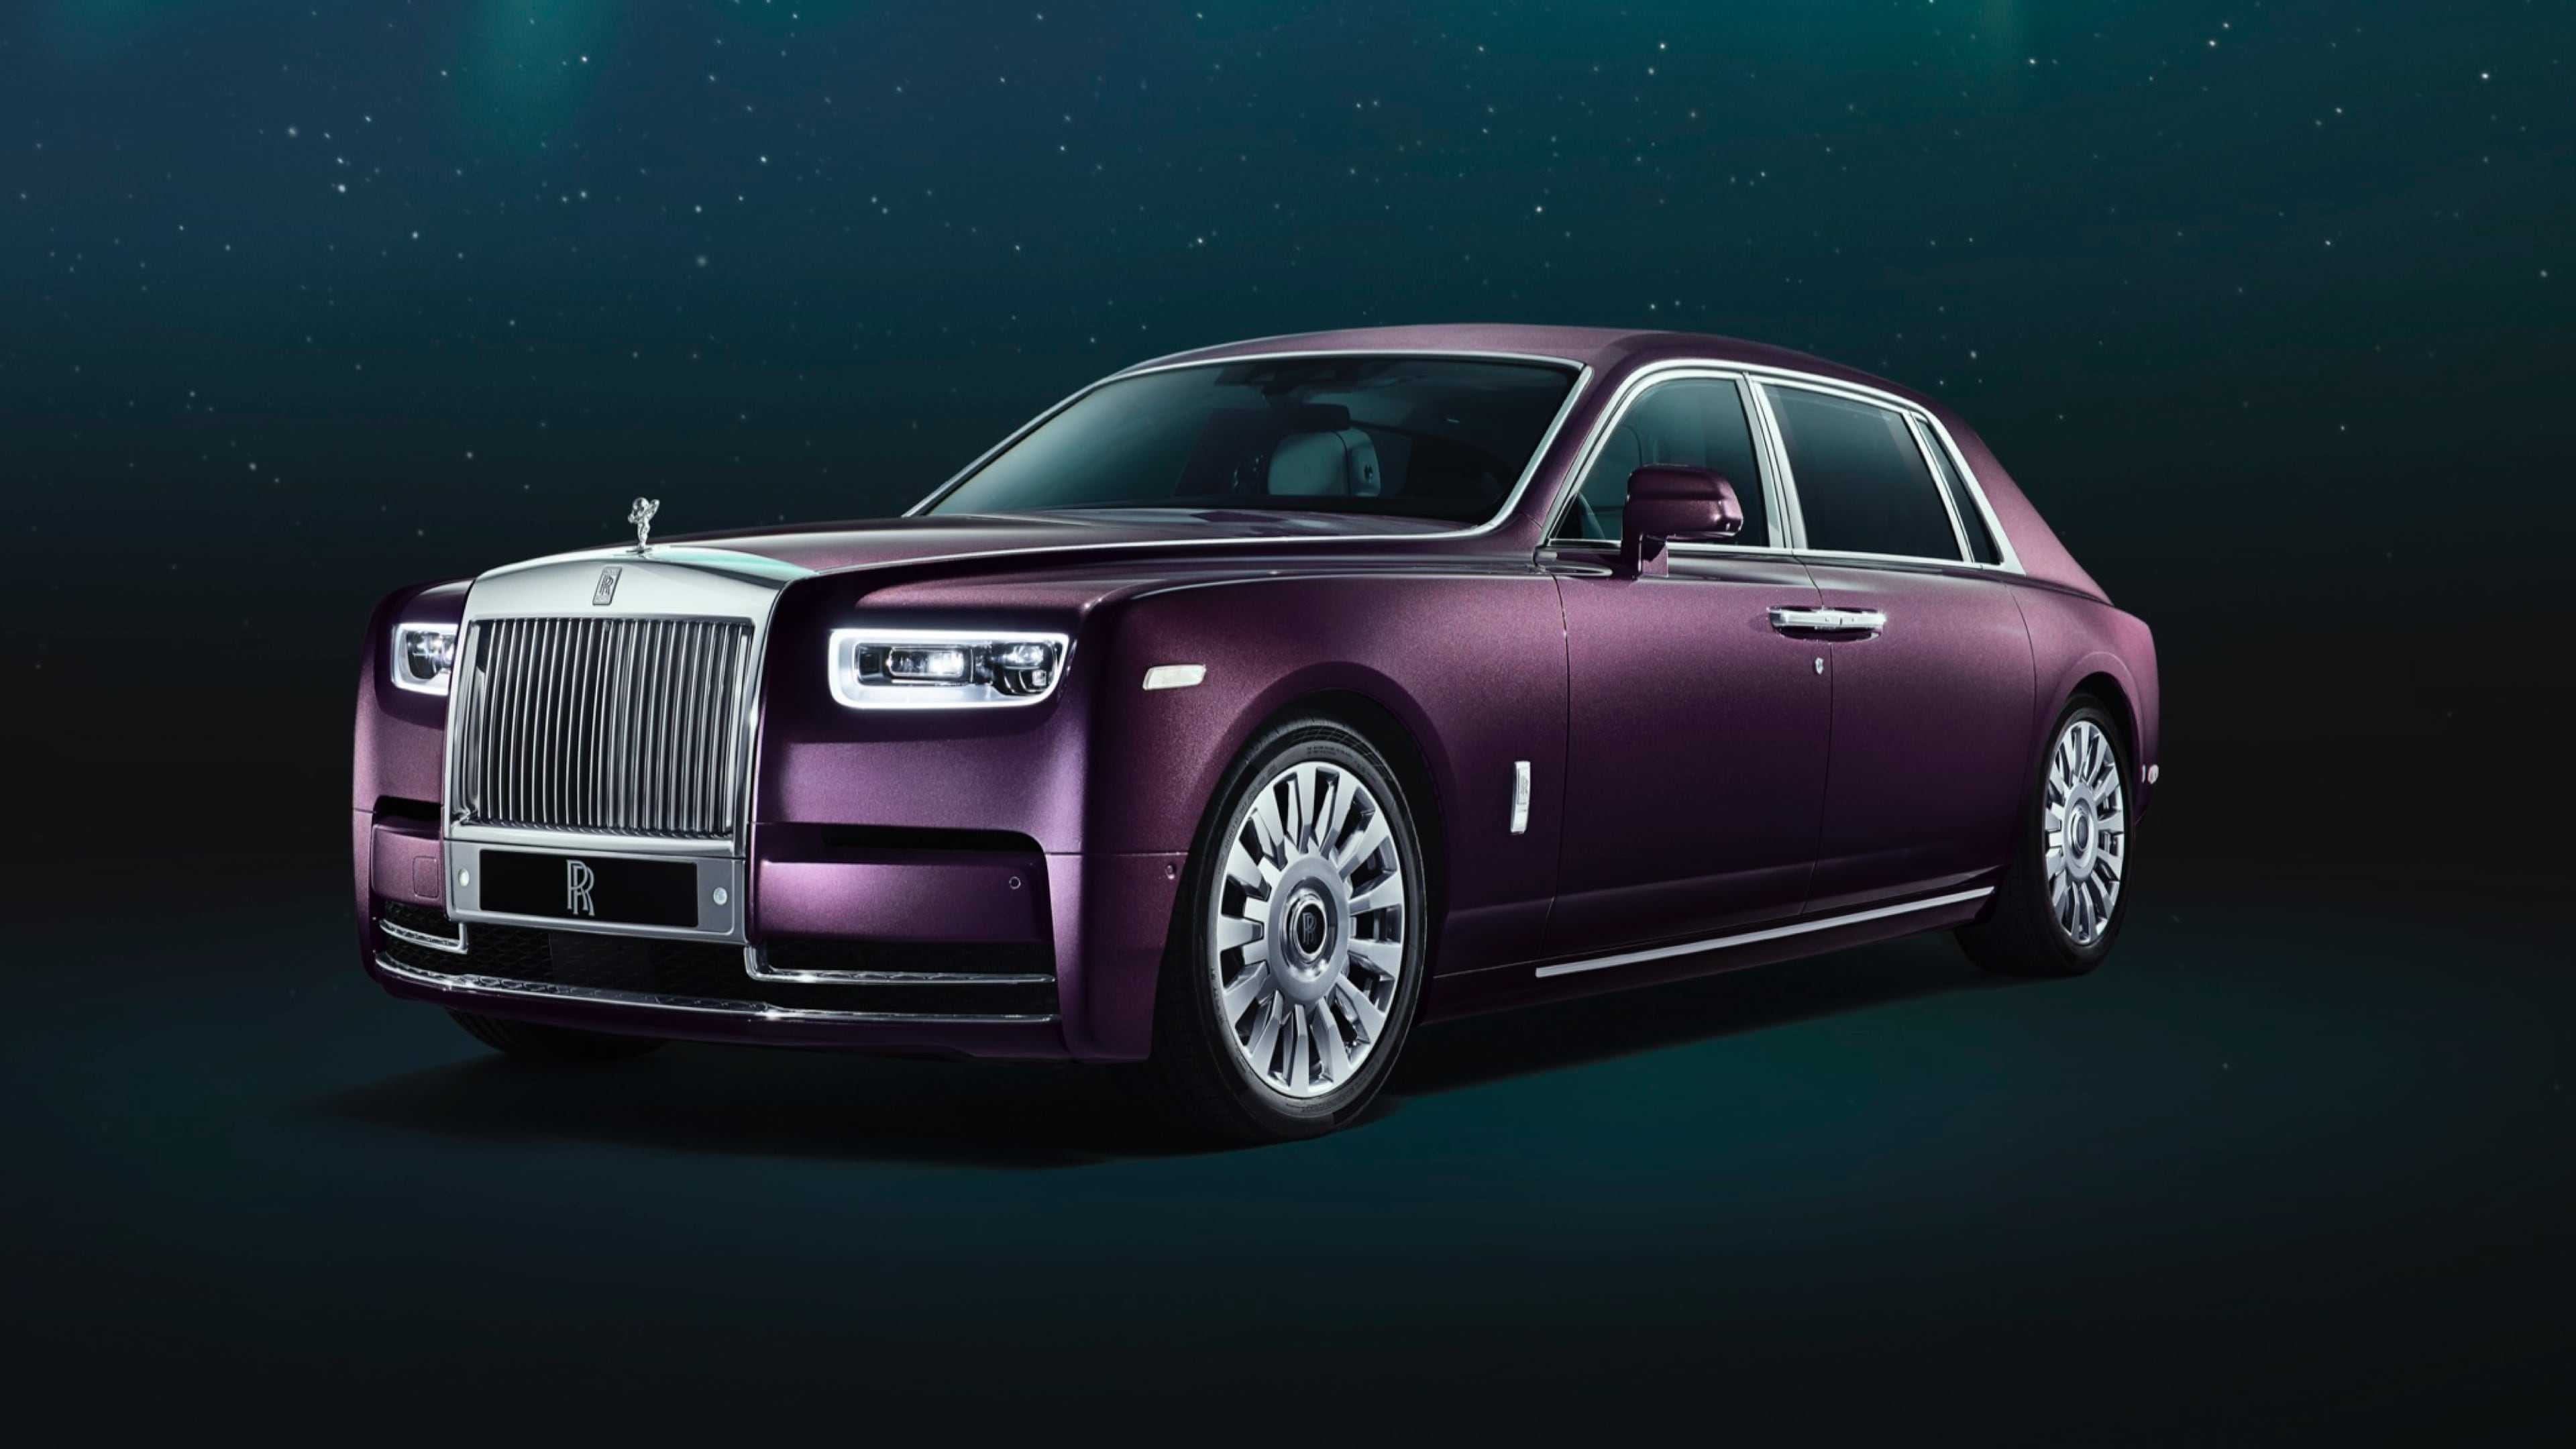 Rolls-Royce Phantom, Purple beauty, Luxury on wheels, Visual spectacle, 3840x2160 4K Desktop